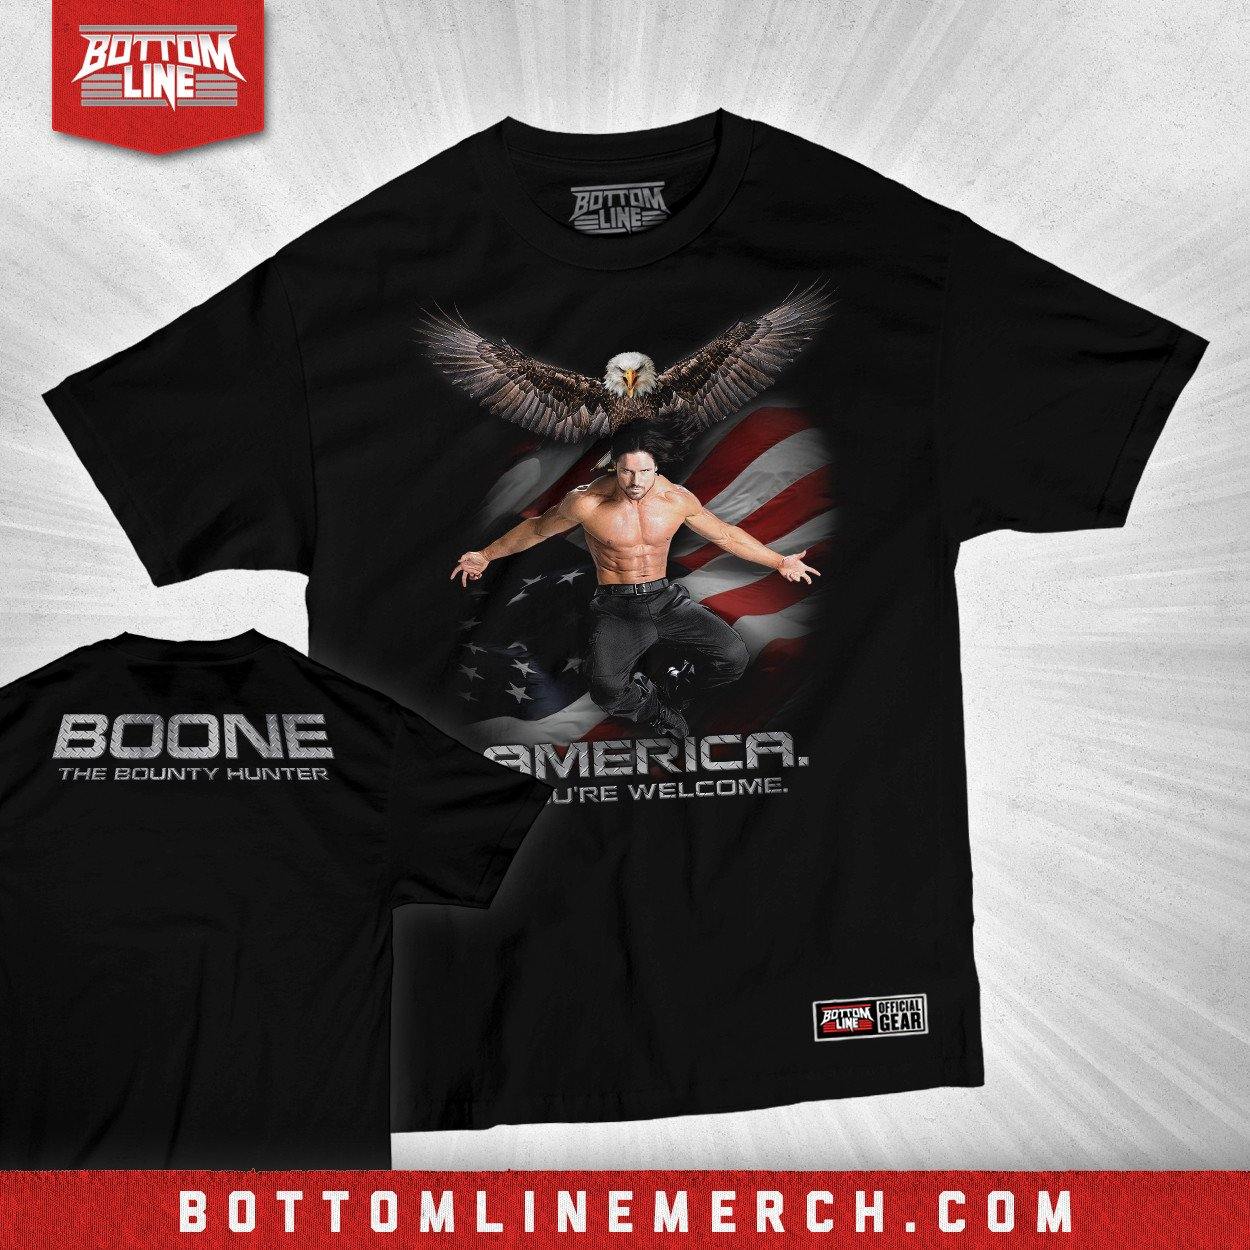 Buy Now – Boone The Bounty Hunter "America, You're Welcome" Shirt – Wrestler & Wrestling Merch – Bottom Line